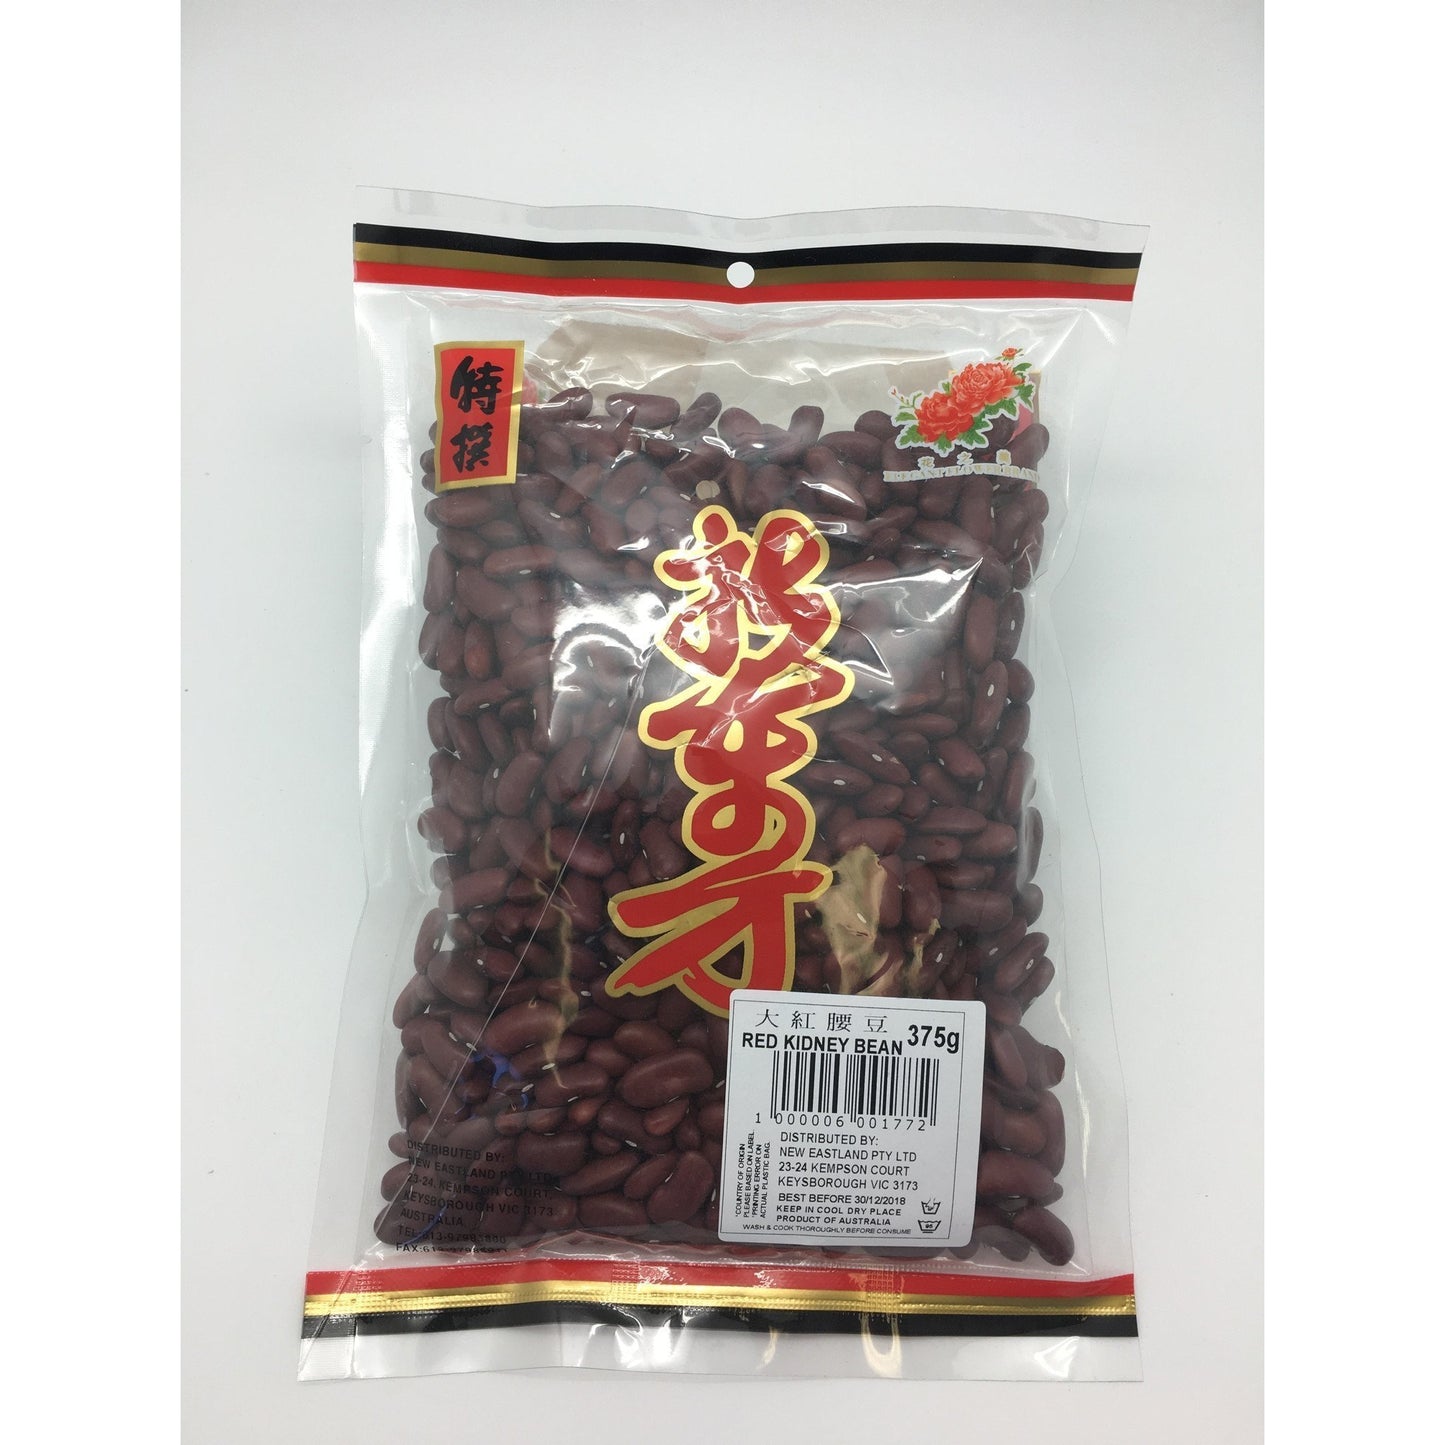 D177S New Eastland Pty Ltd - Red Kidney Bean 375g - 40 bags / 1 CTN - New Eastland Pty Ltd - Asian food wholesalers